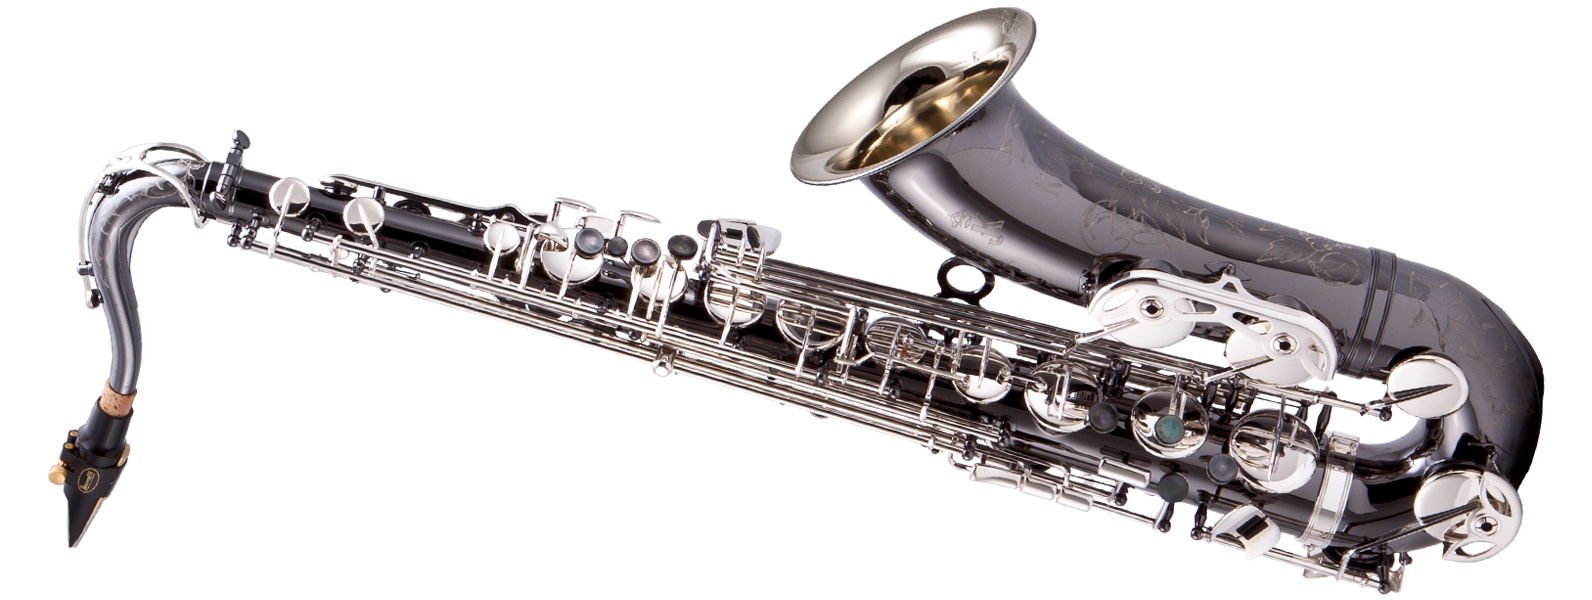 Keilwerth Julius Keilwerth SX90R Bb Professional Tenor Saxophone